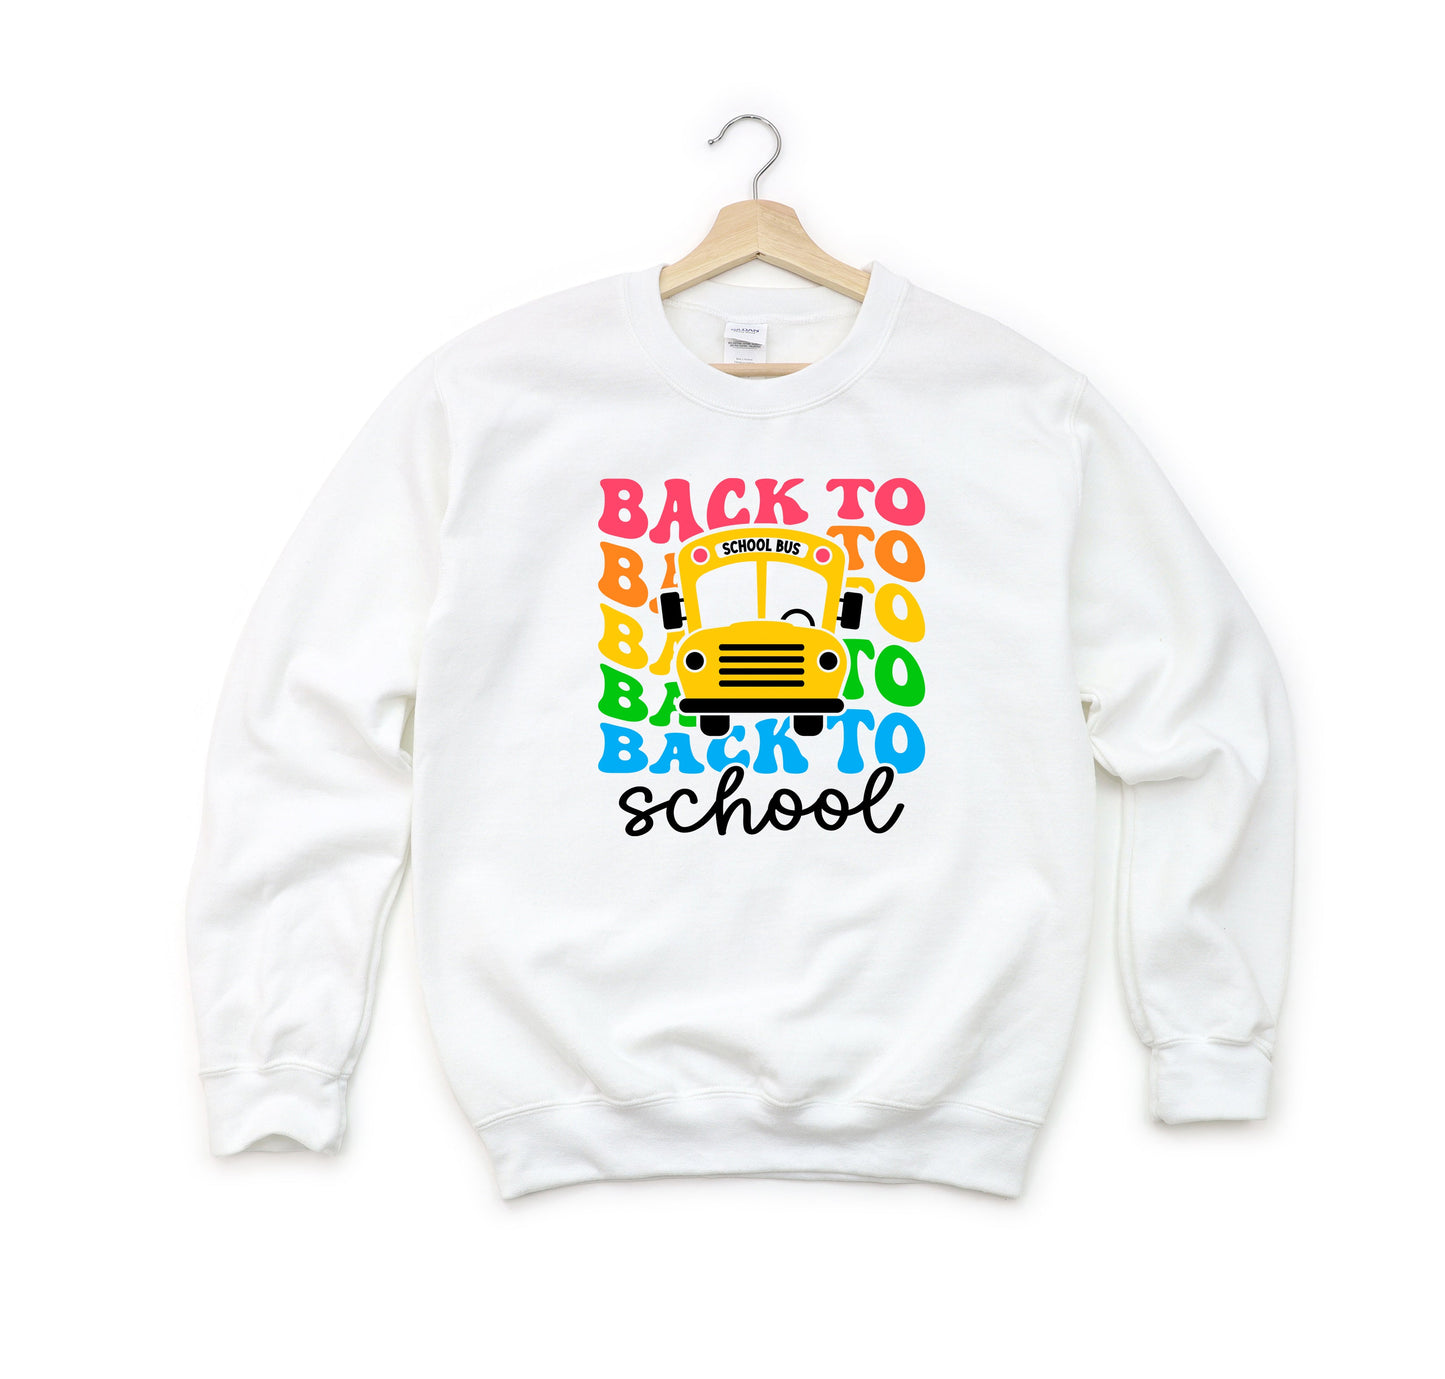 Back To School Bus | Youth Graphic Sweatshirt